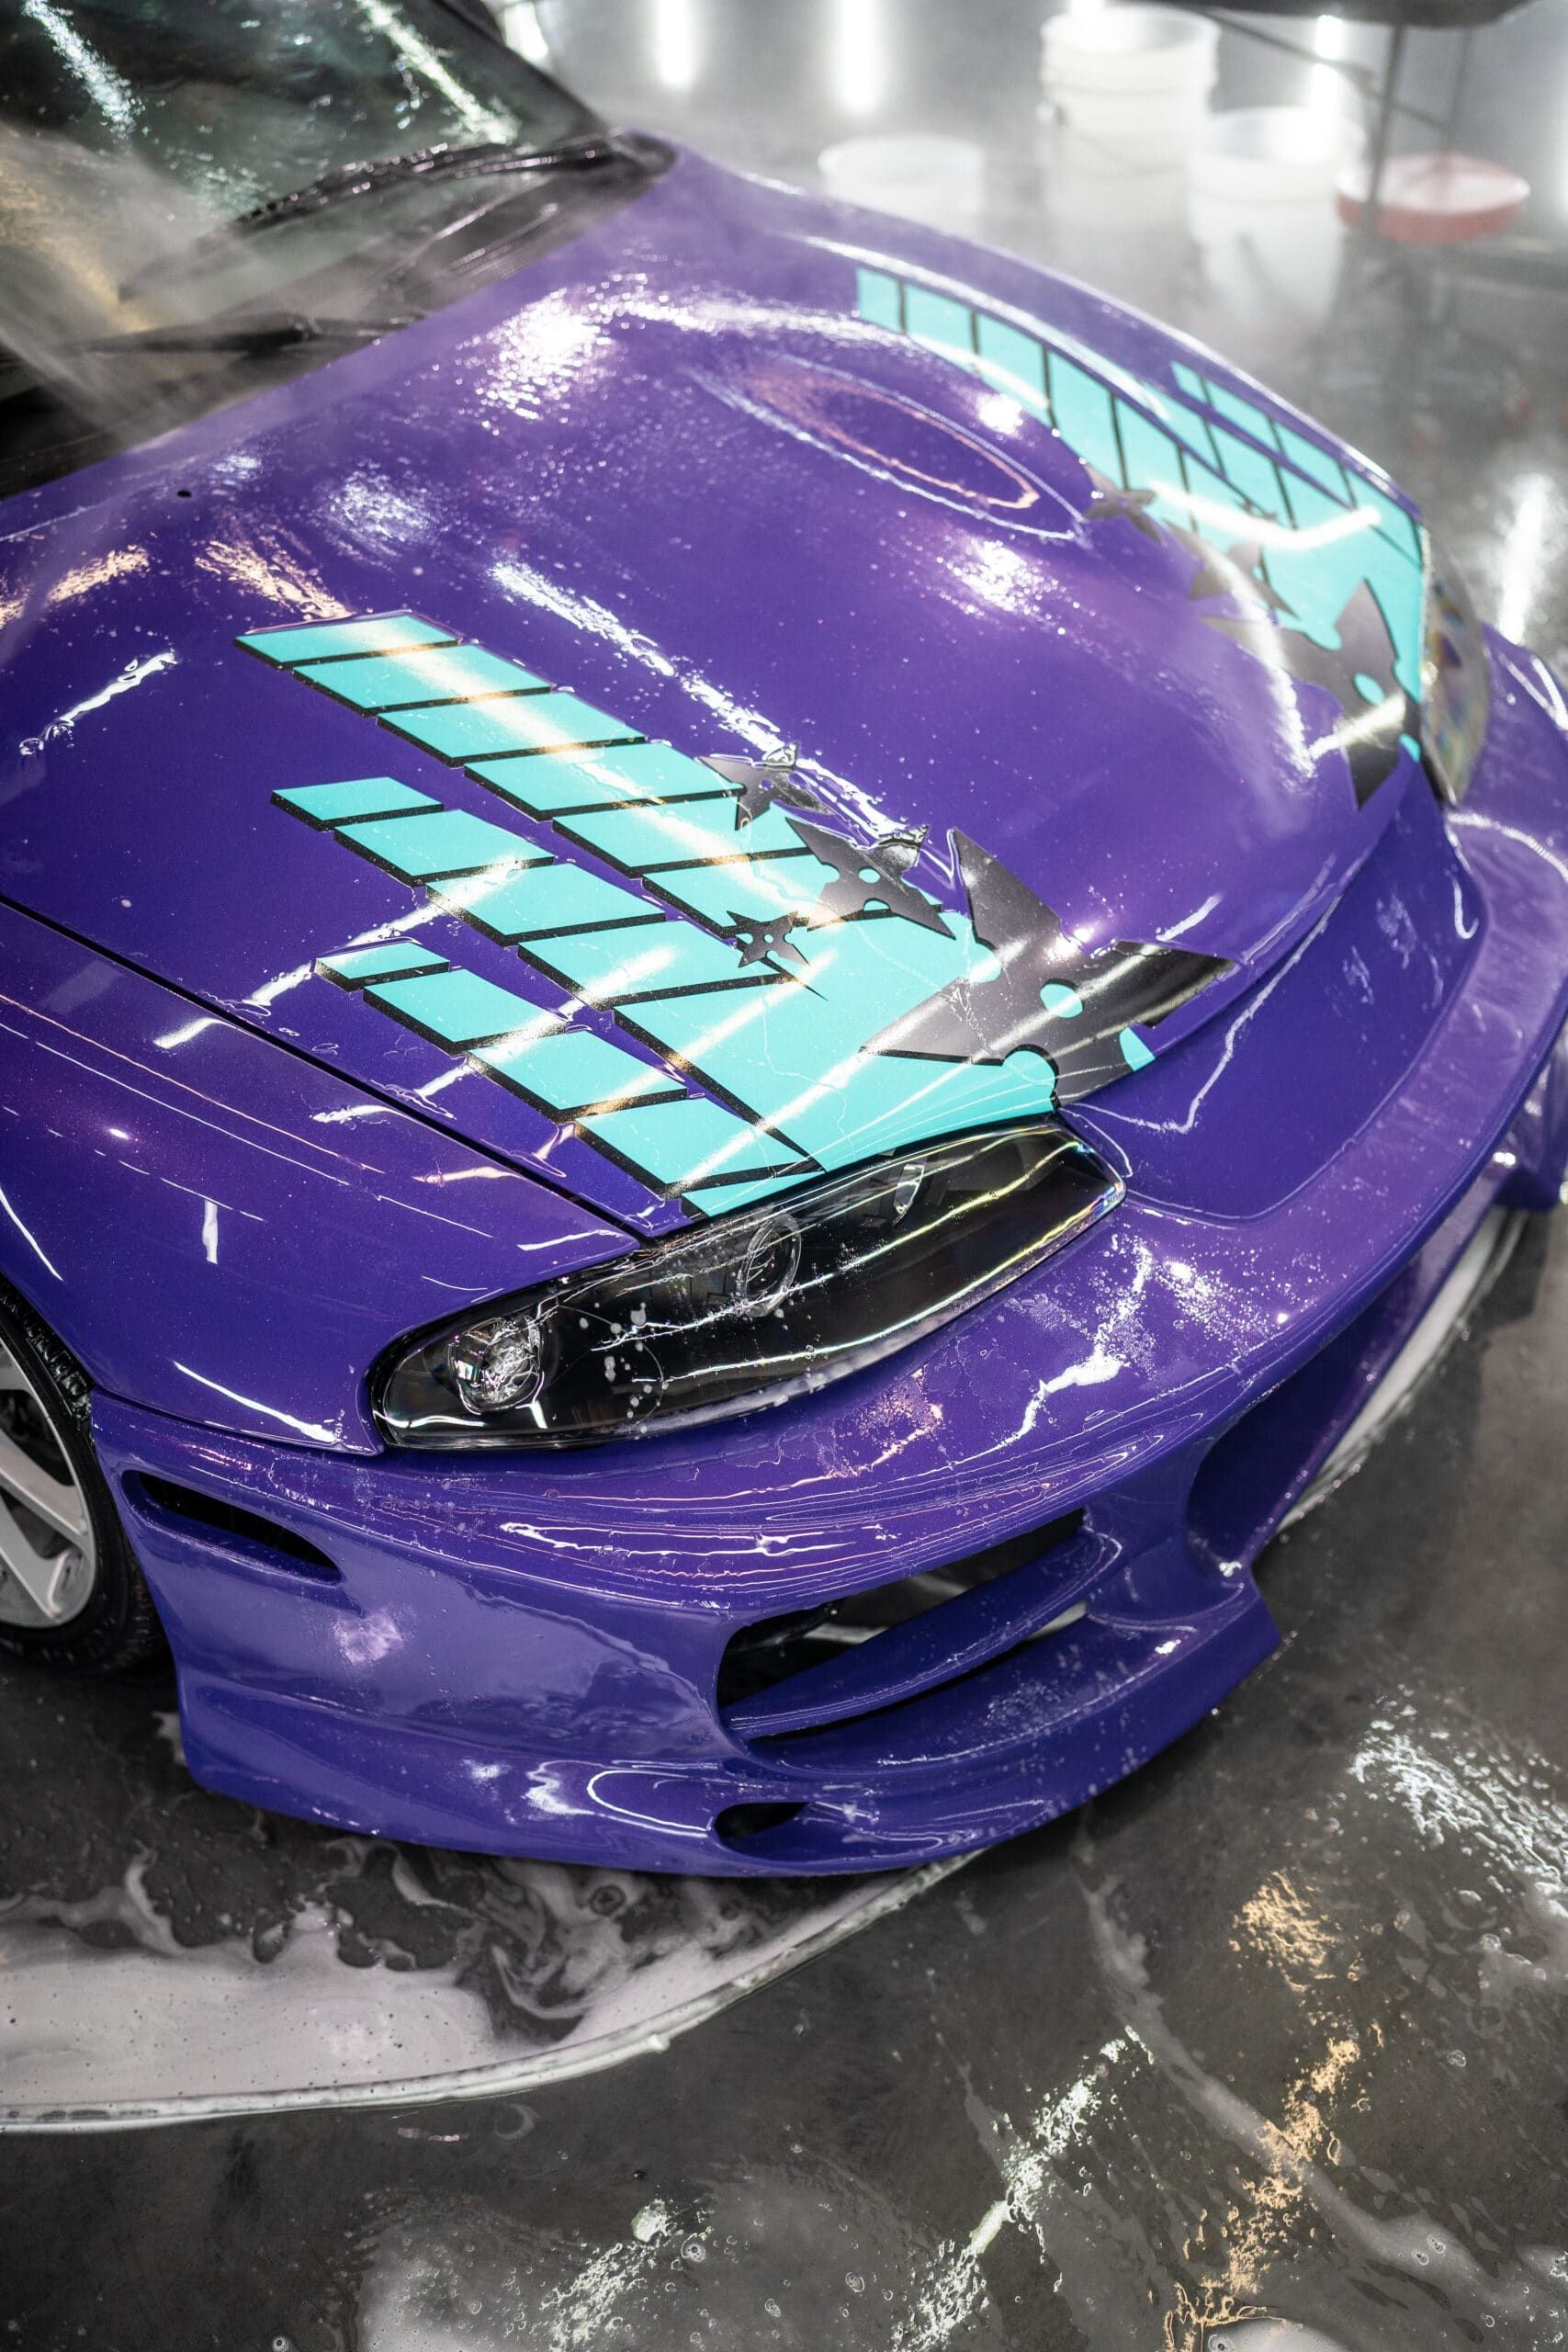 A purple car with a blue stripe on the hood